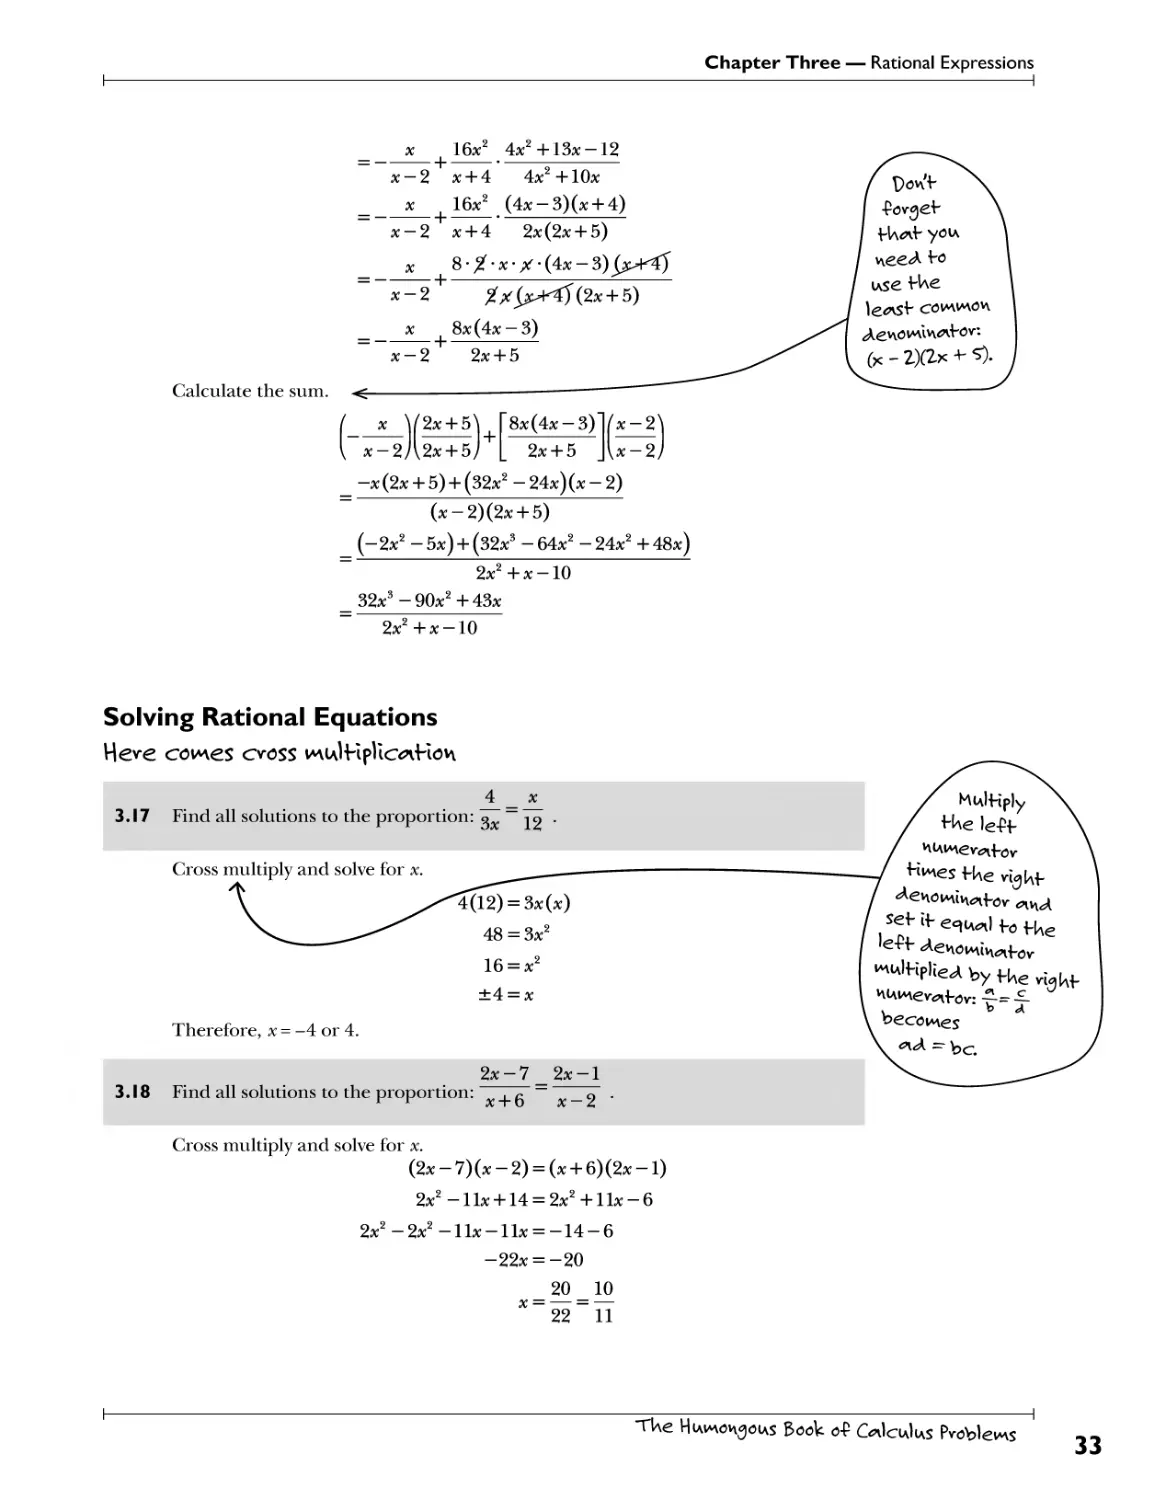 Solving Rational Equations 33